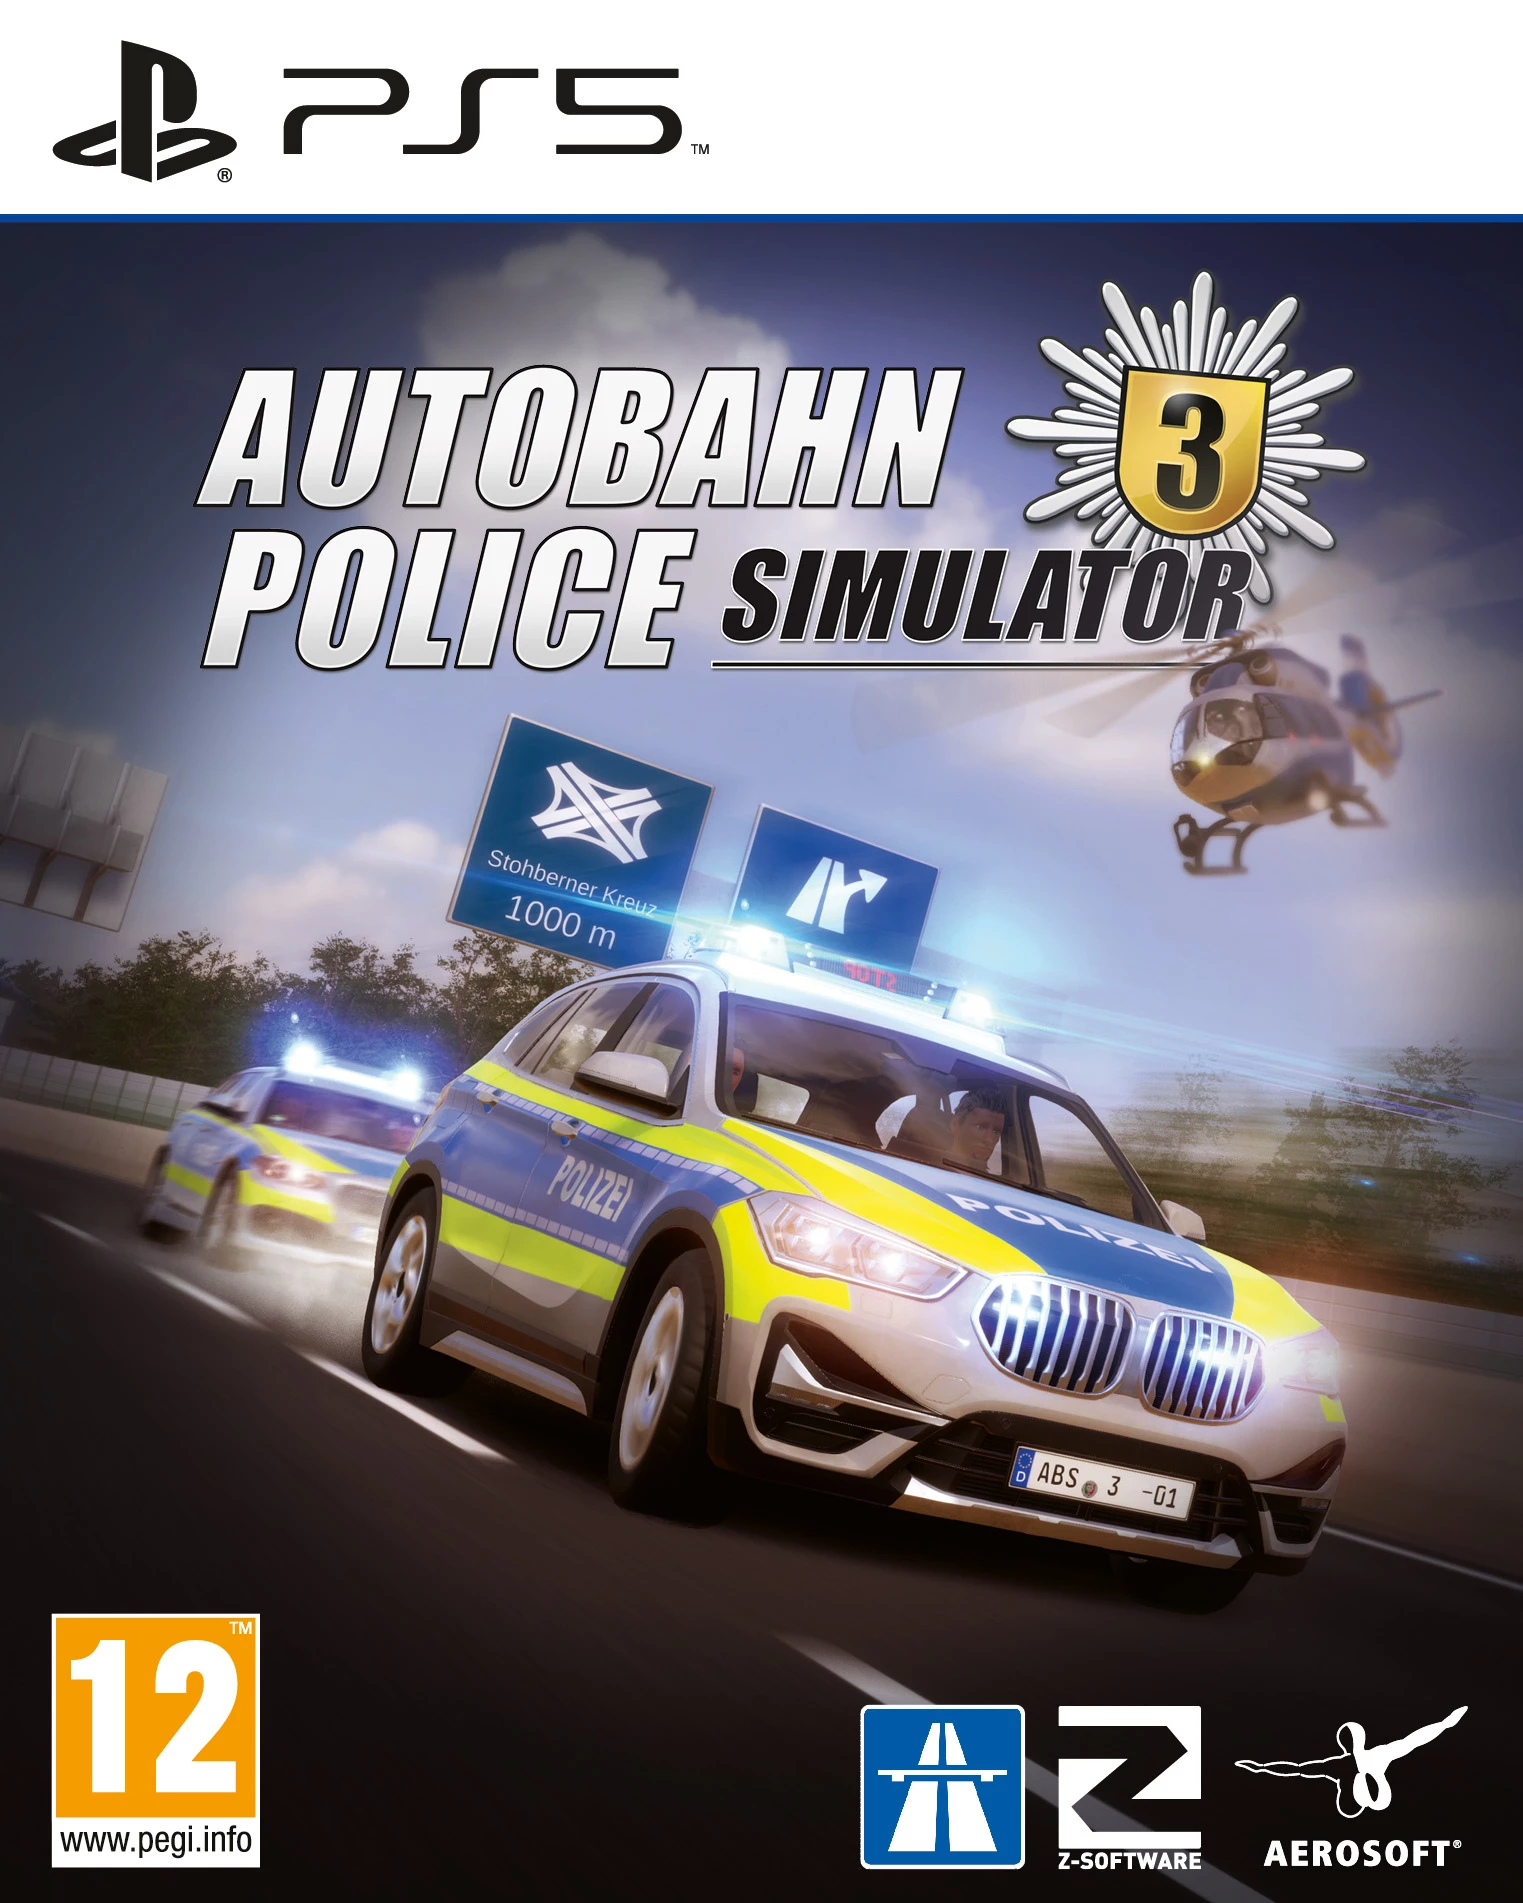 Autobahn Police Simulator 3 (PS5), Aerosoft